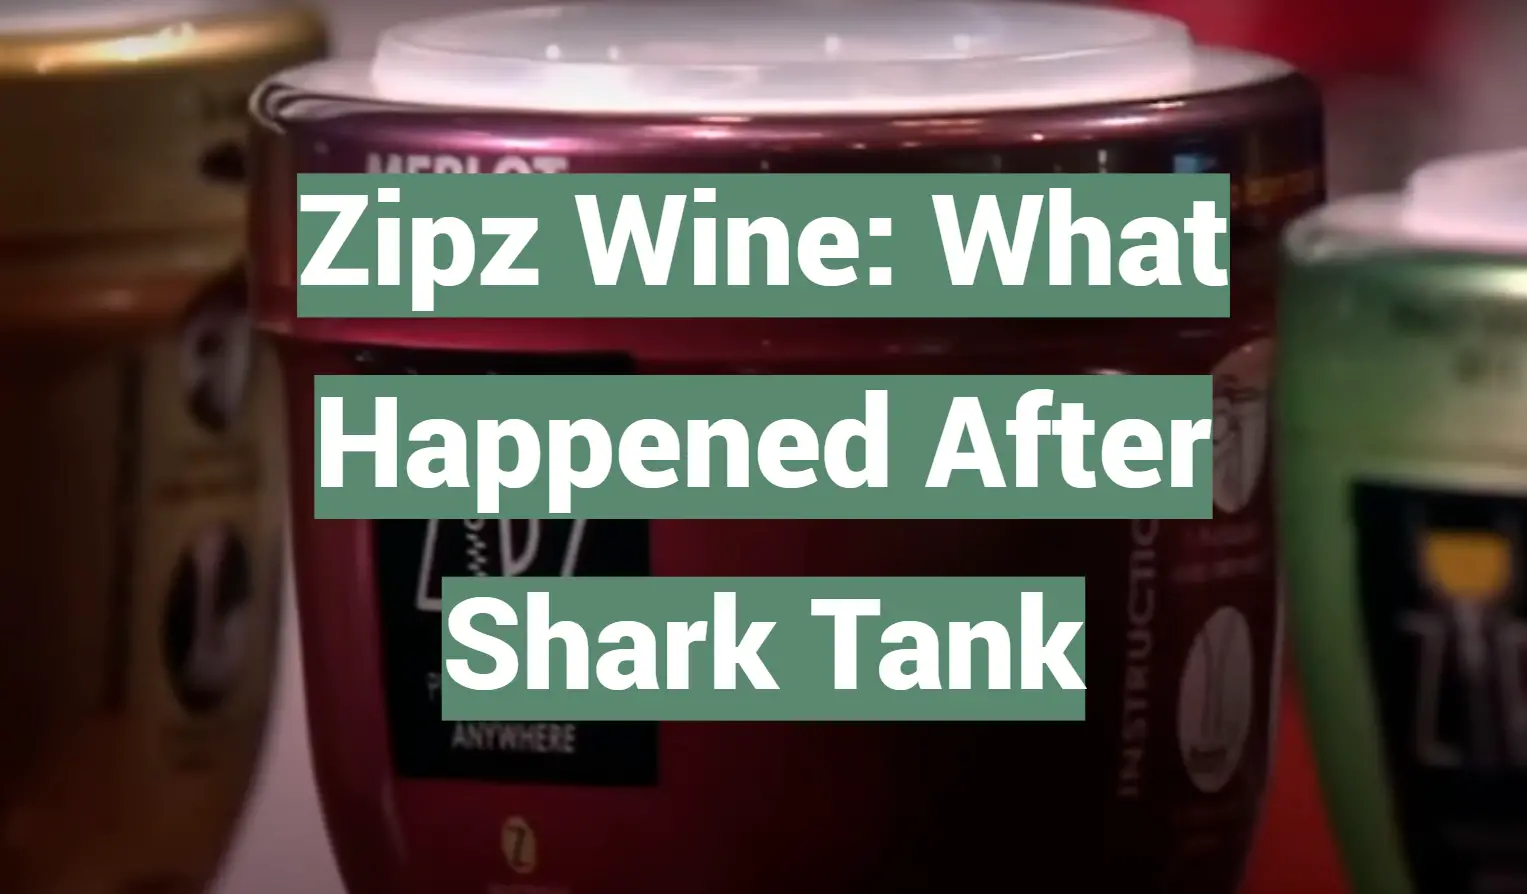 Zipz Wine: What Happened After Shark Tank